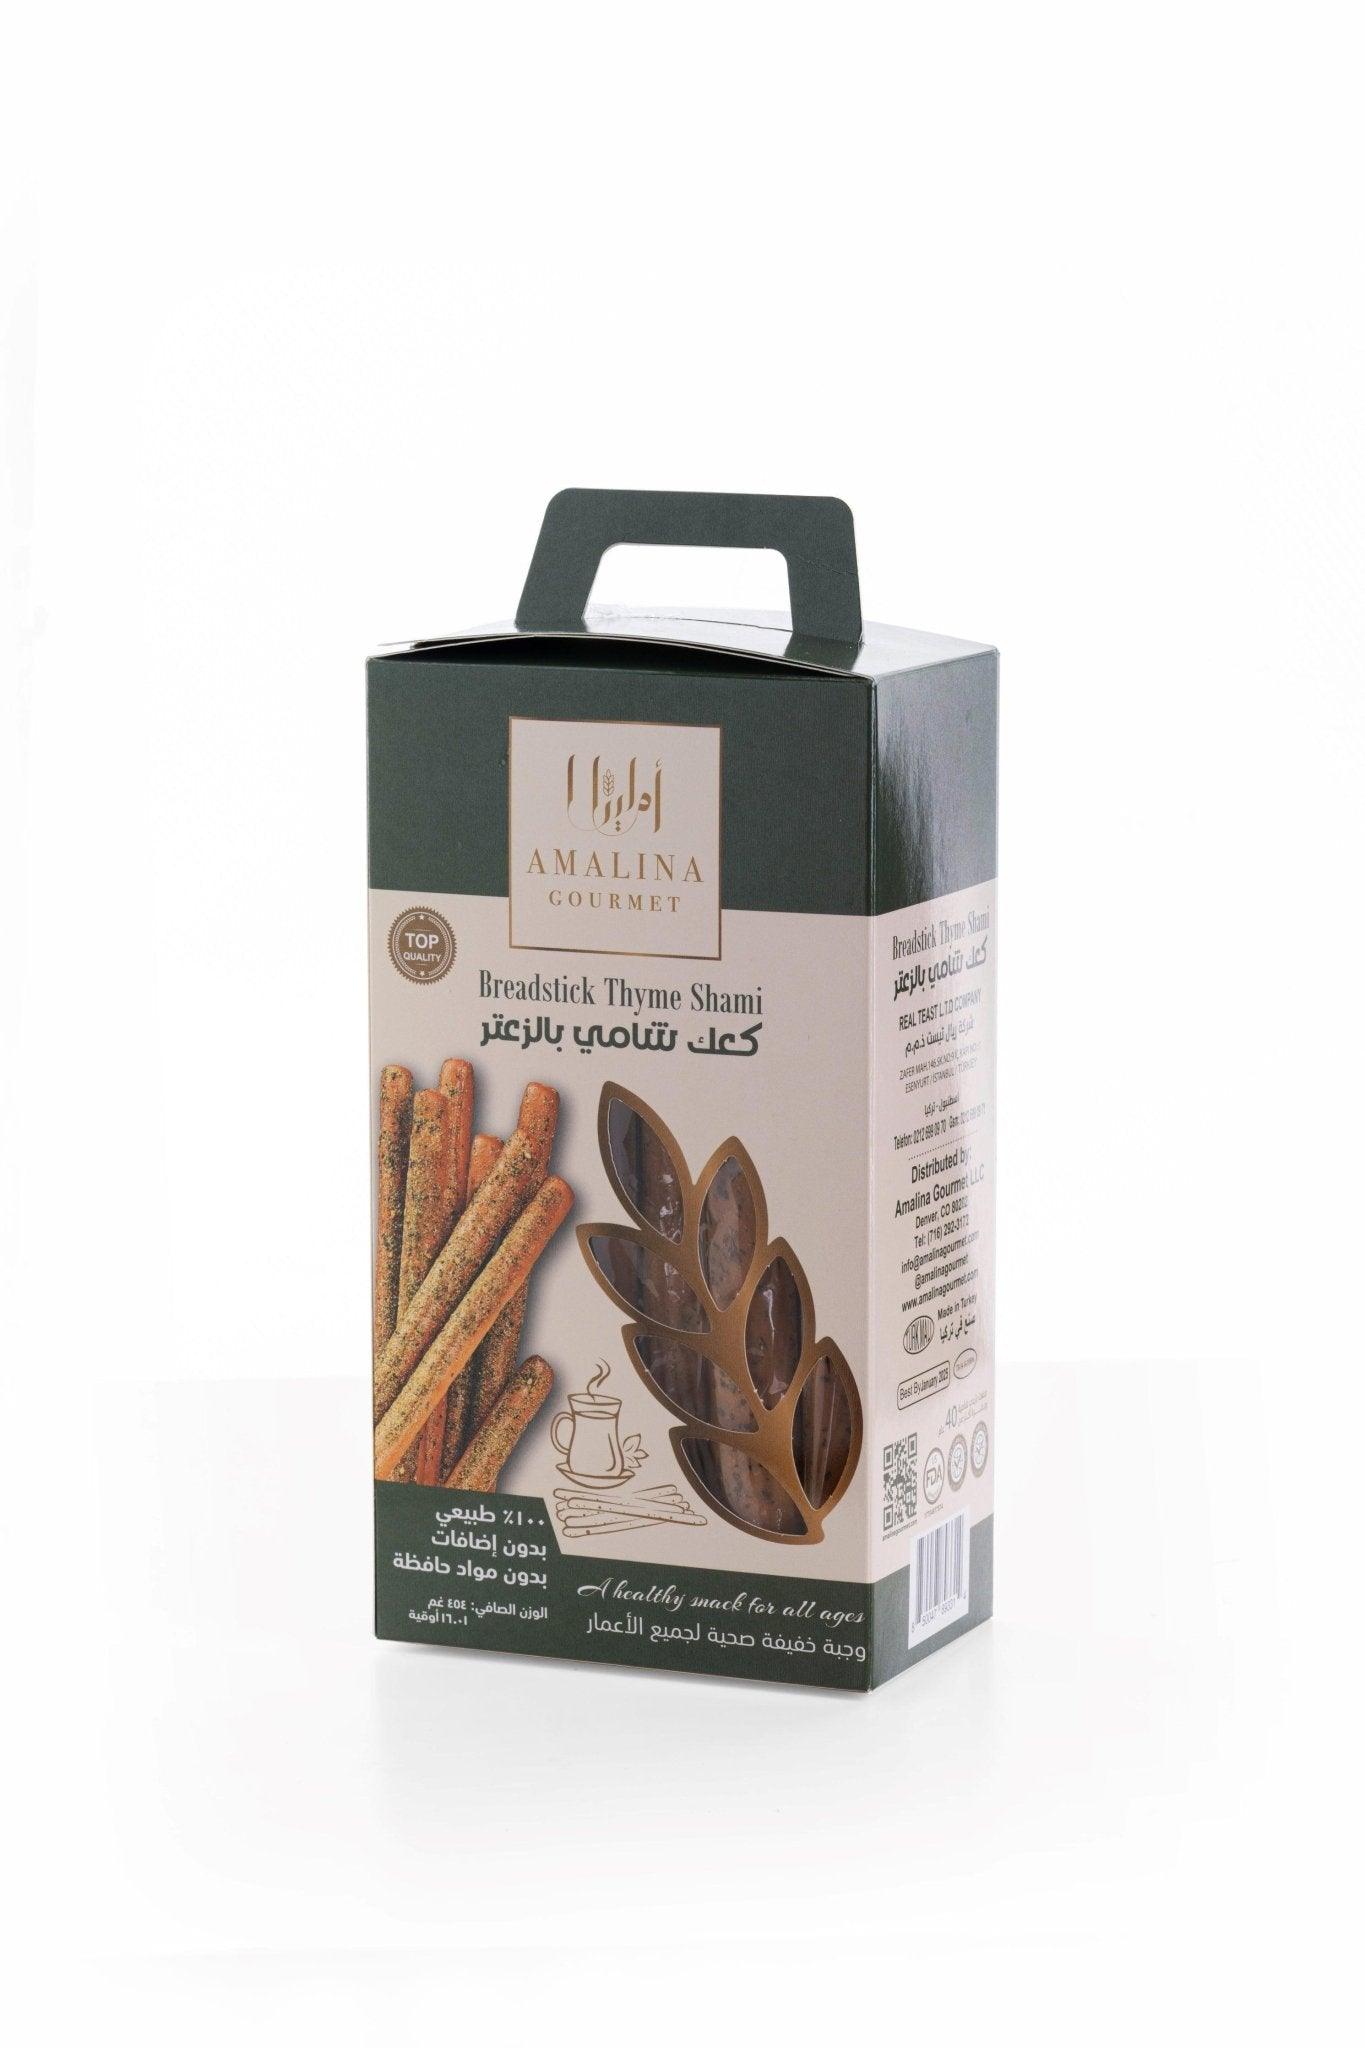 Breadsticks with Thyme "Za'atar" كعك شامي بالزعتر - Amalina Gourmet